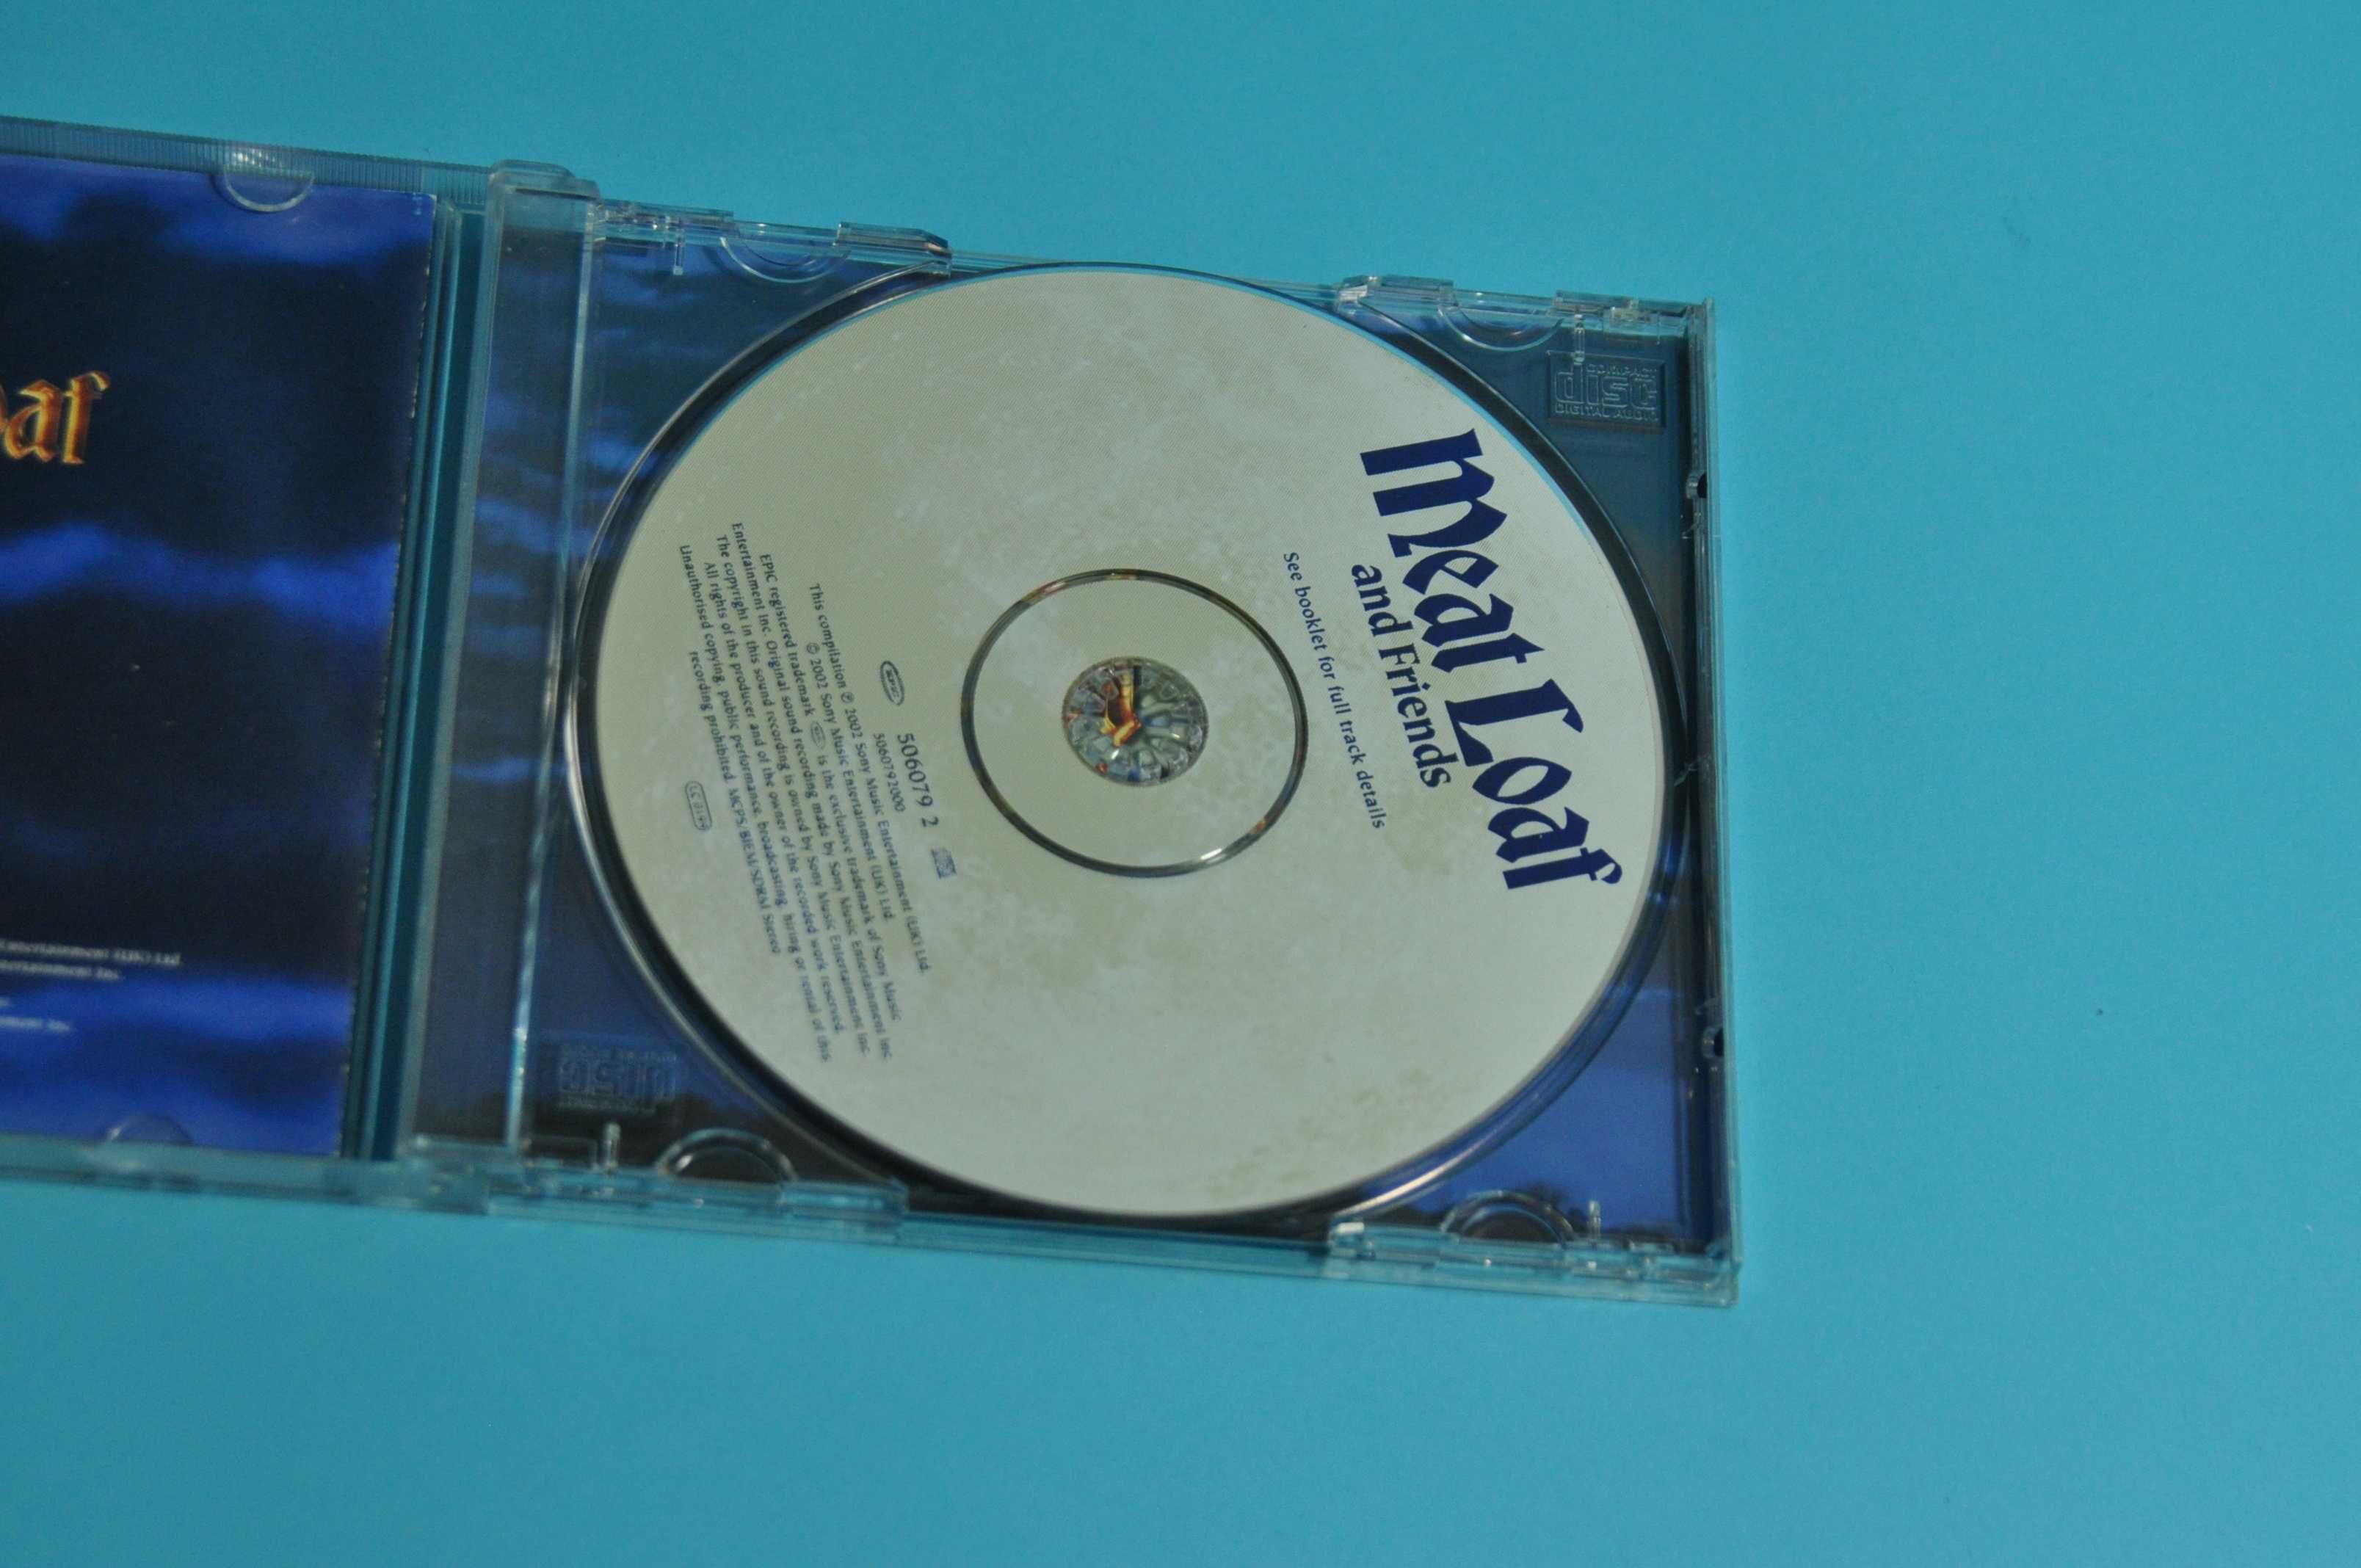 Meat Loaf and Friends płyta CD Bonnie Tyler, Jim Steinman